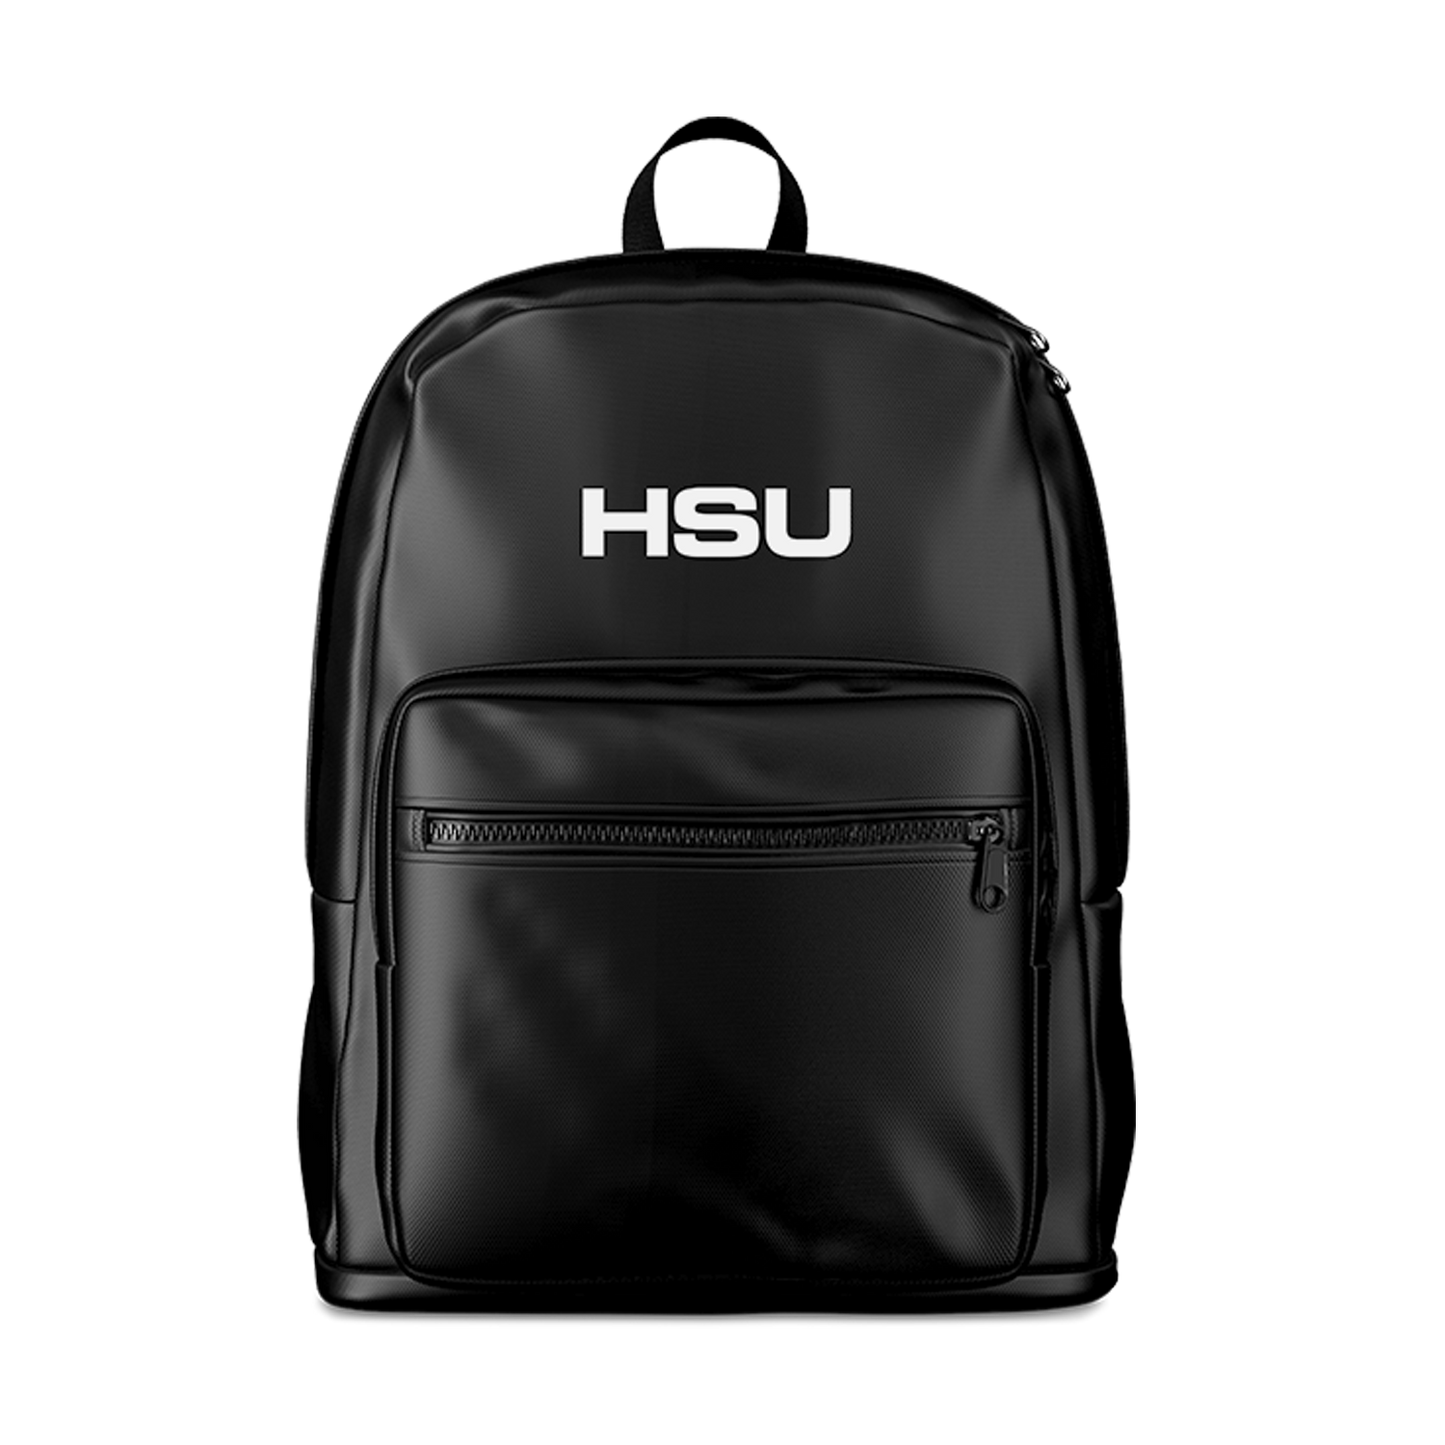 HSU Small Backpack x Black